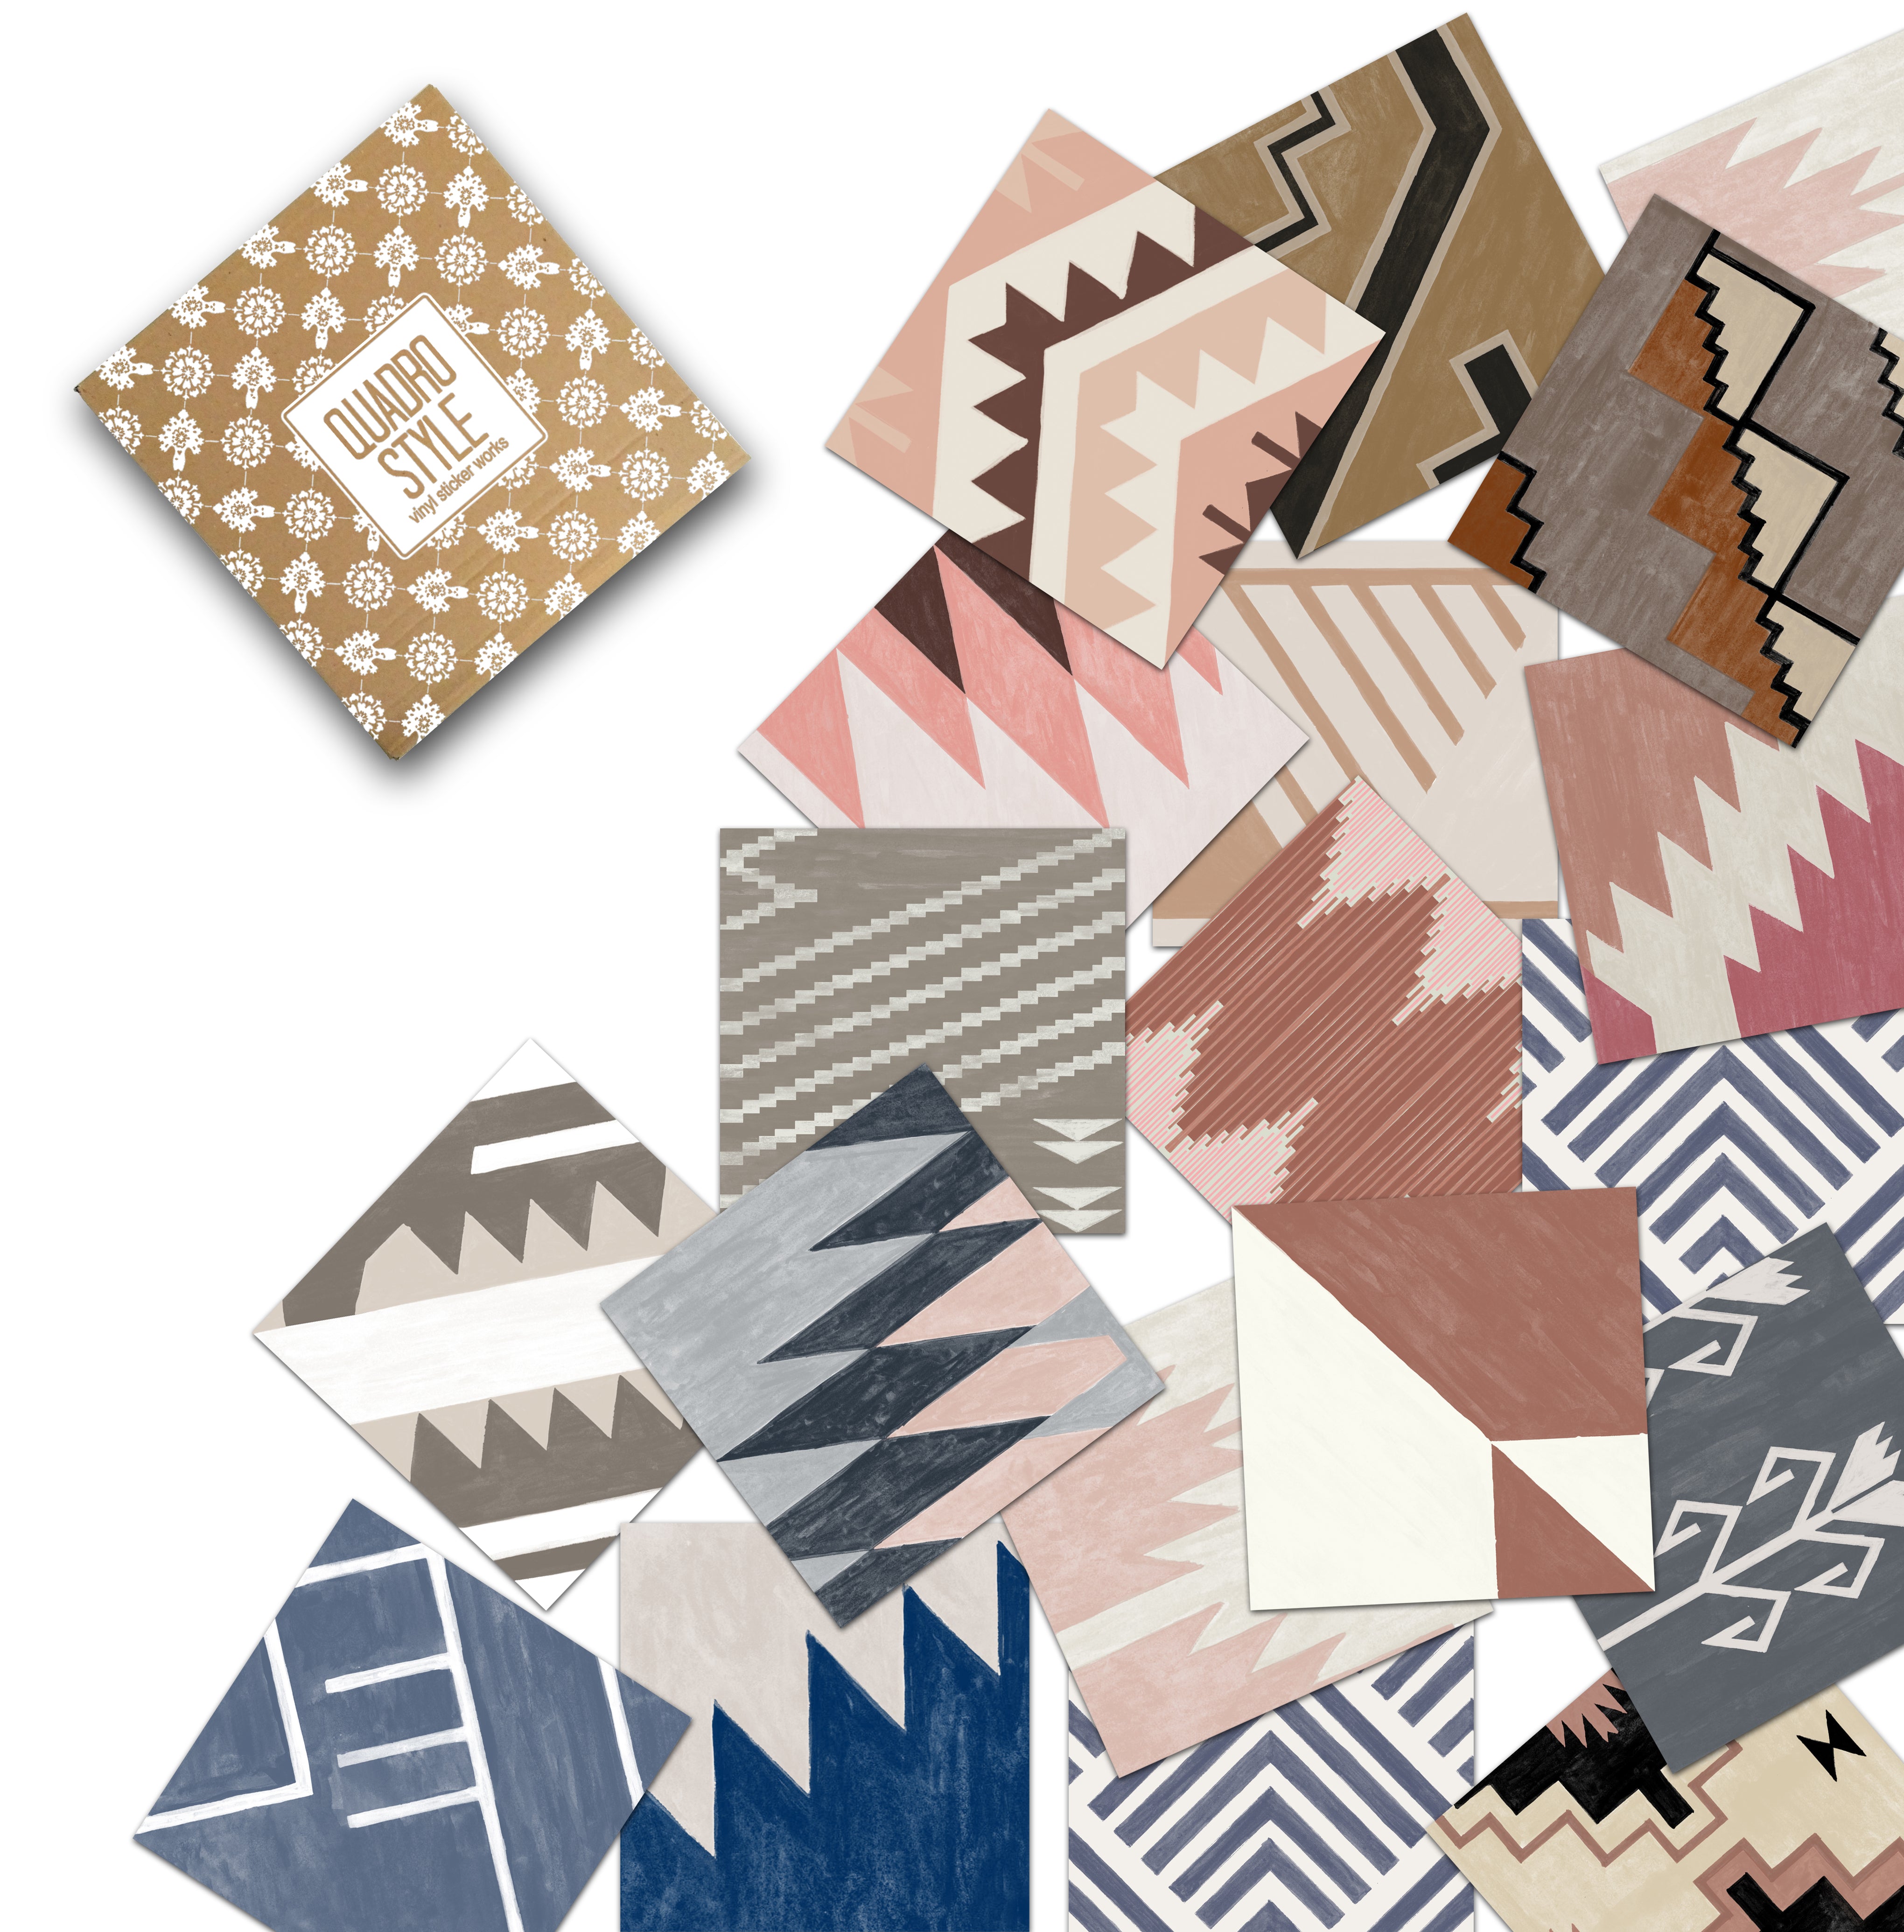 Quadrostyle 18 Desert Loom Collection Tile Sticker Sampler Set inc. Free Shipping